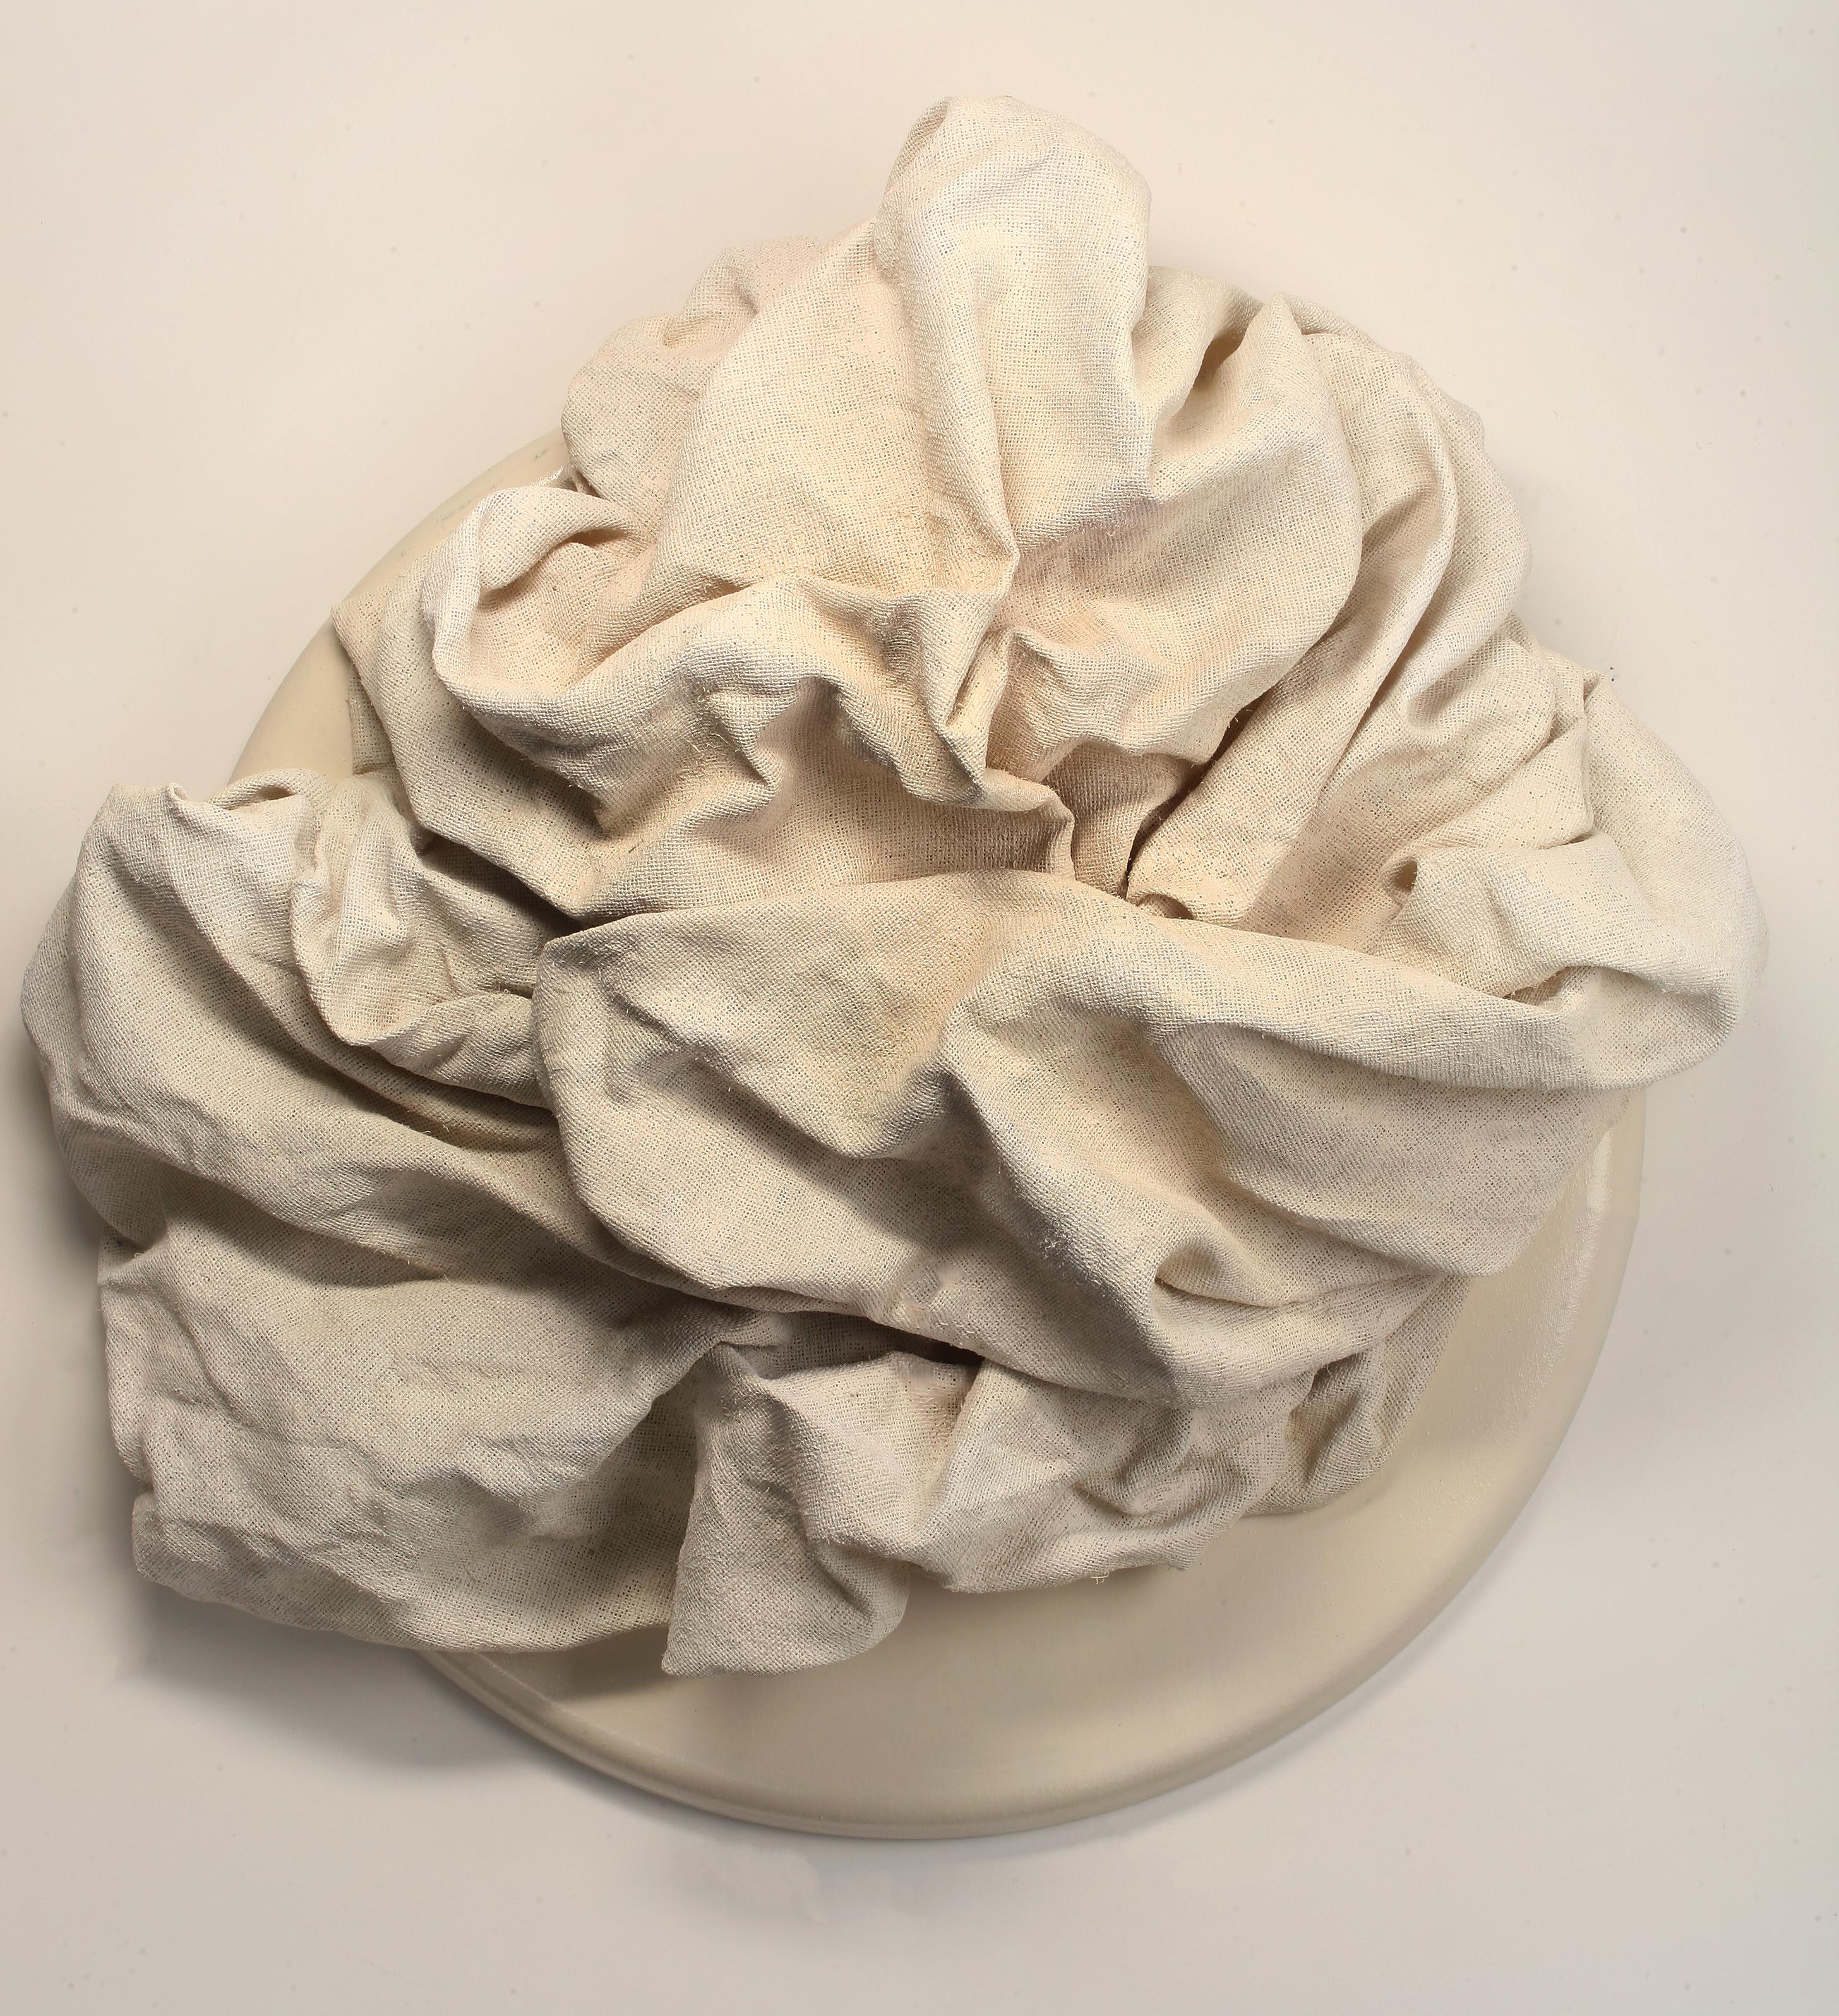 Cream Folds (fabric art, wall sculpture, contemporary design, textile arts) 